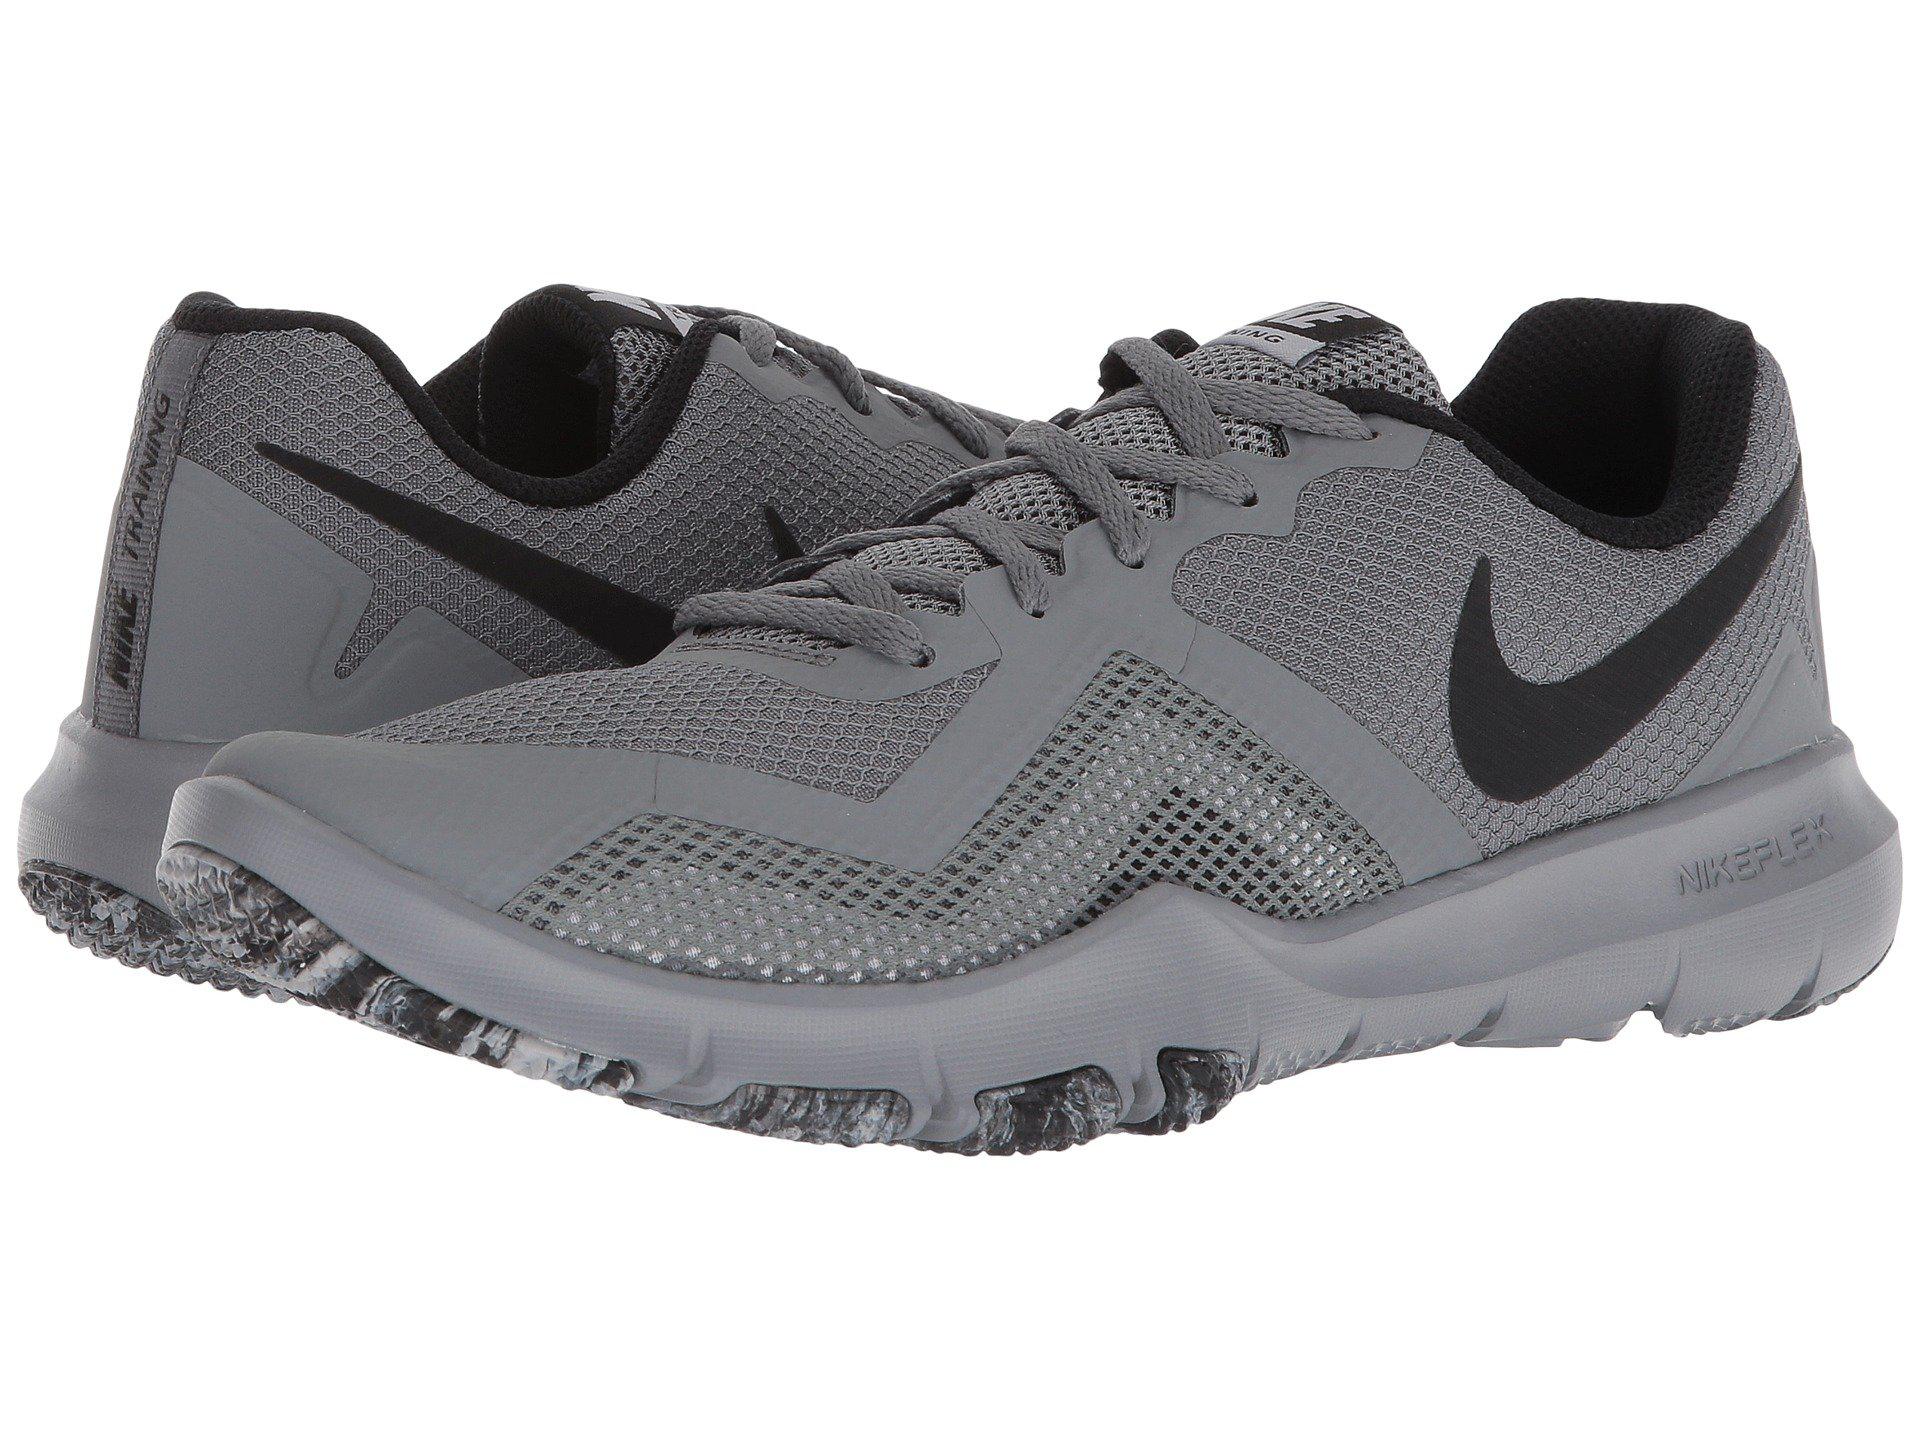 Nike Synthetic Flex Control Ii Cross Trainer in Gray for Men - Lyst